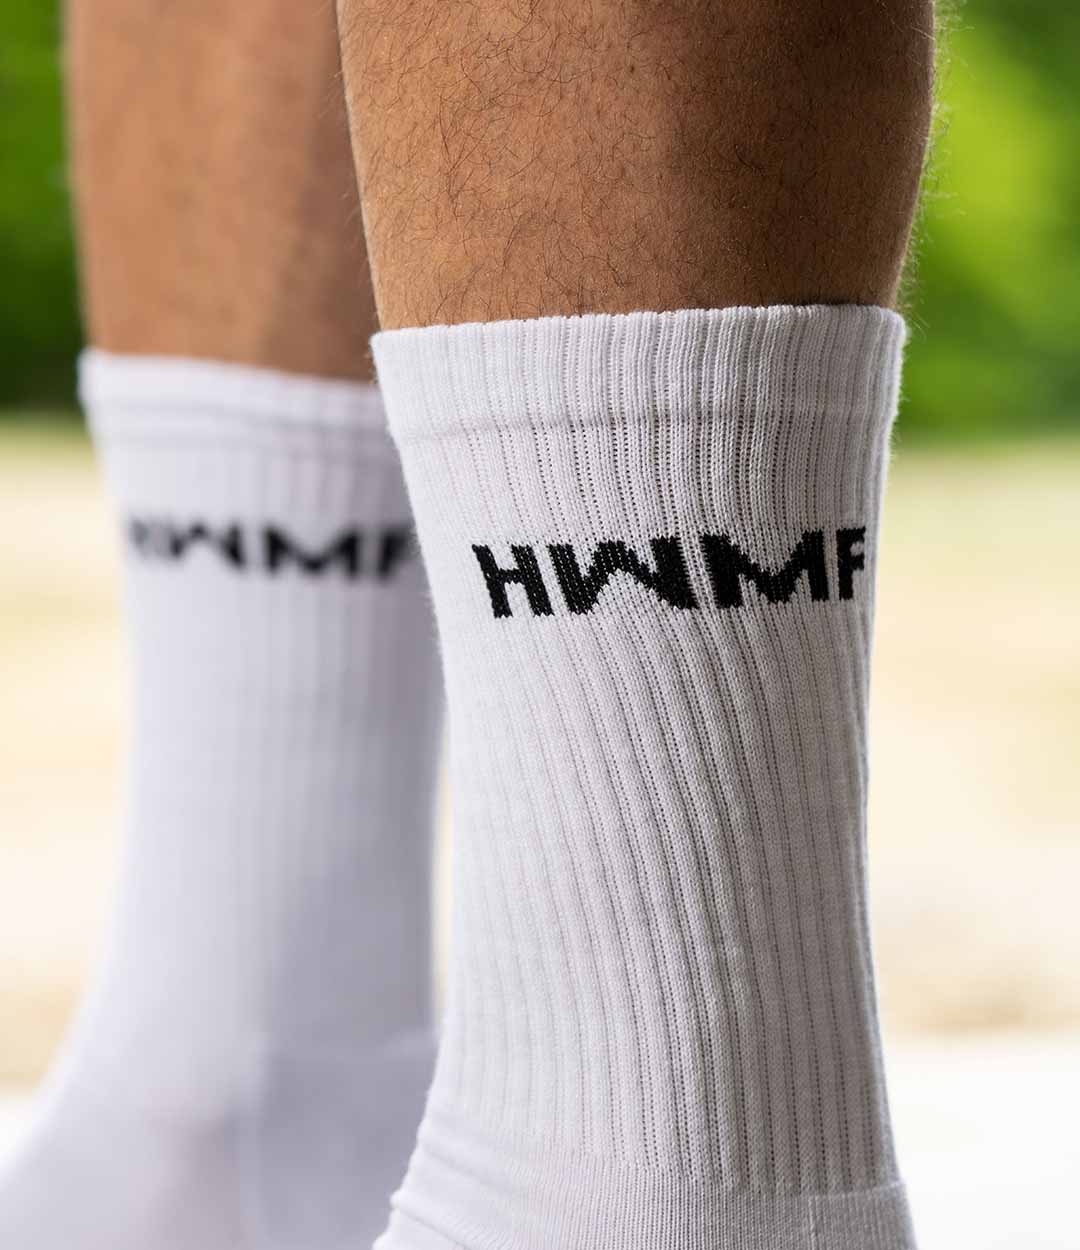 HWMF Crew Socks // White